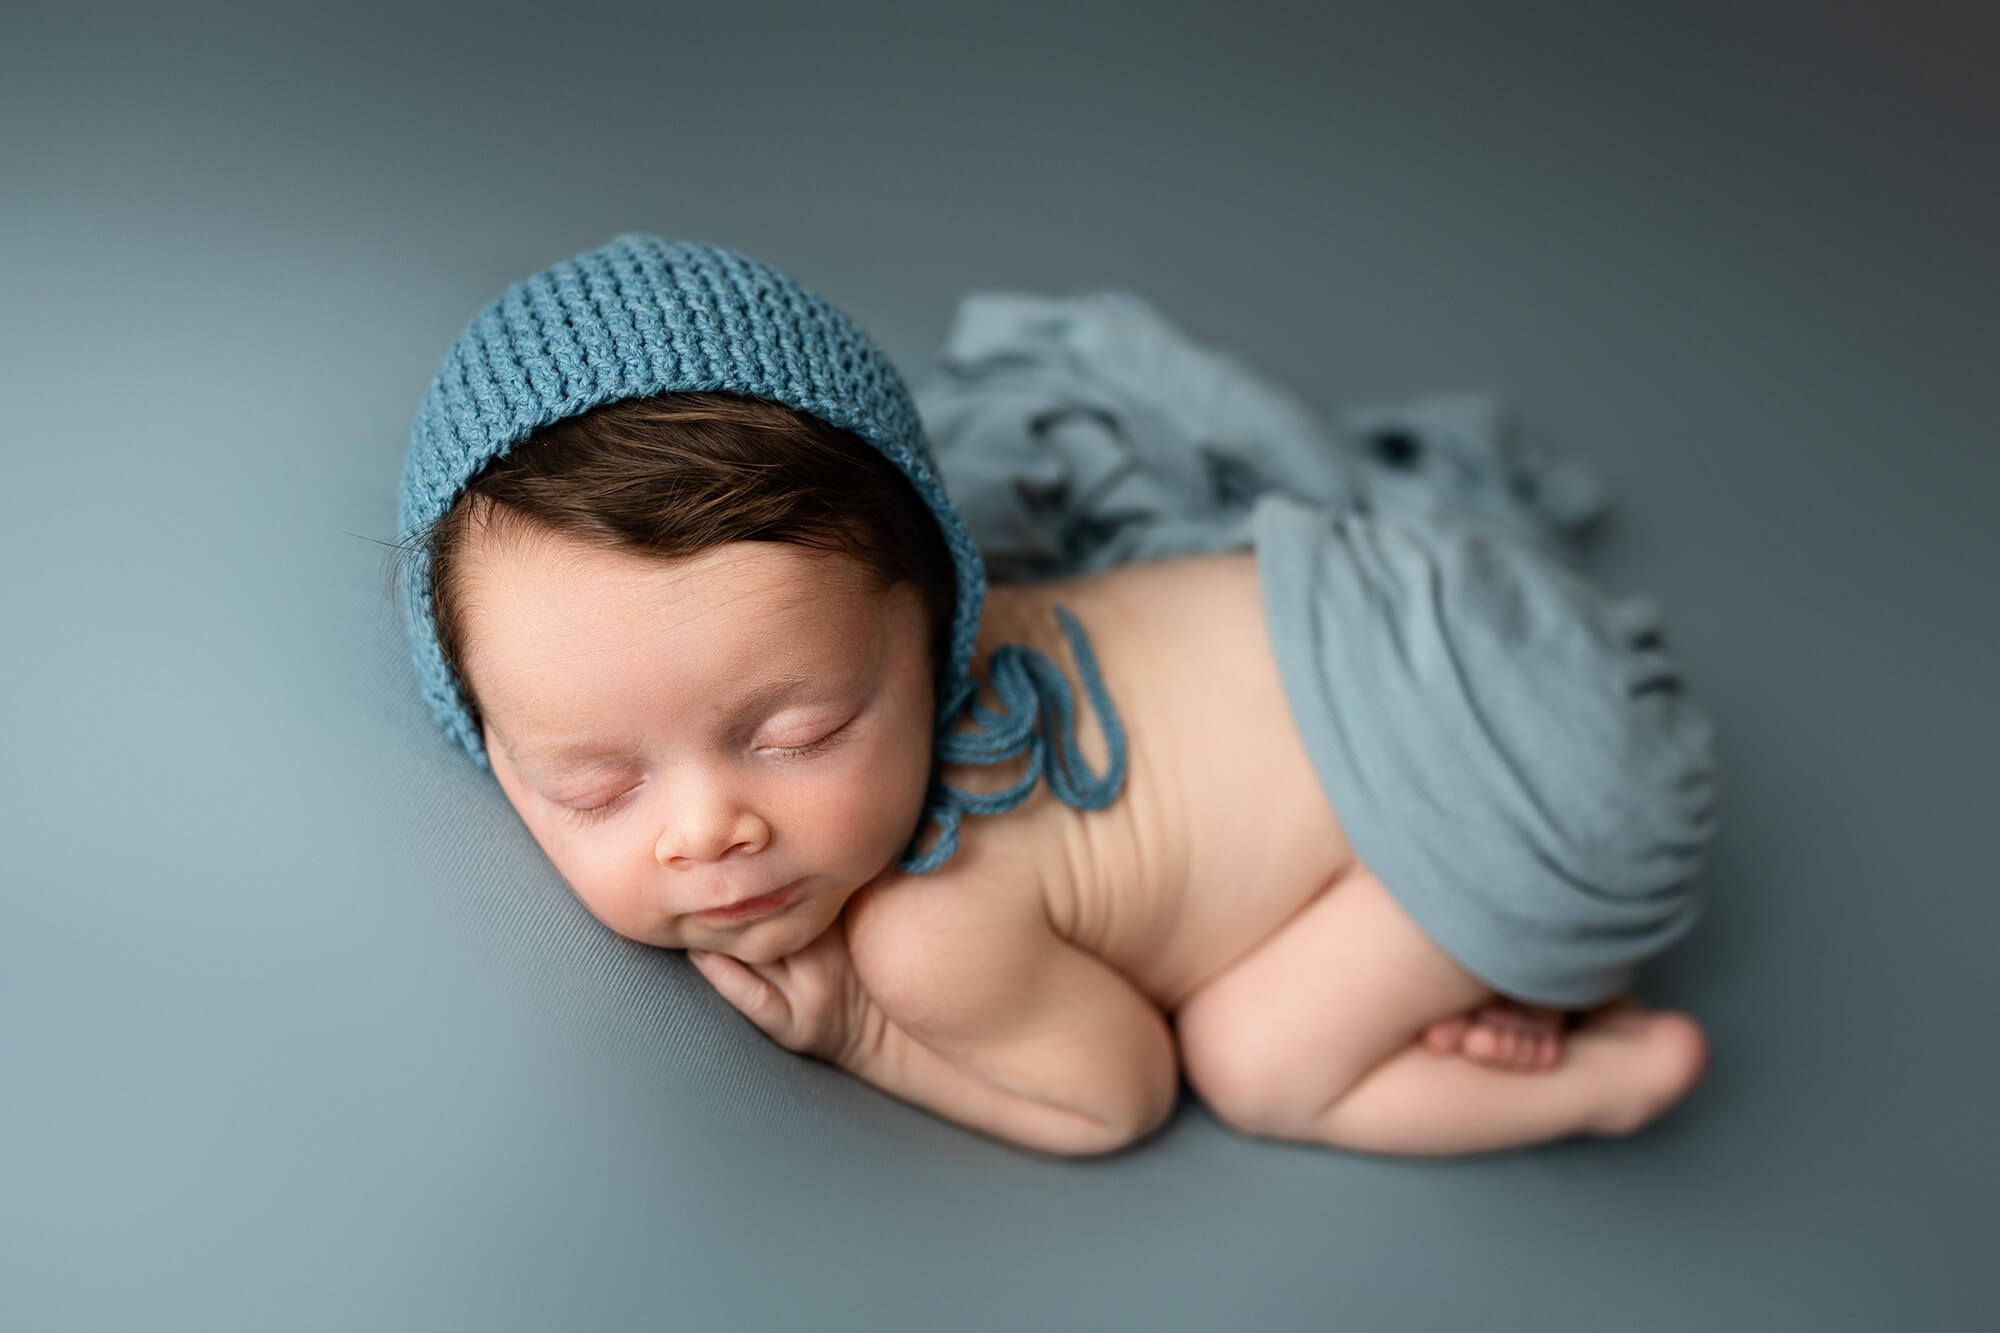 Infant boy posed on blue wearing a blue bonnet.